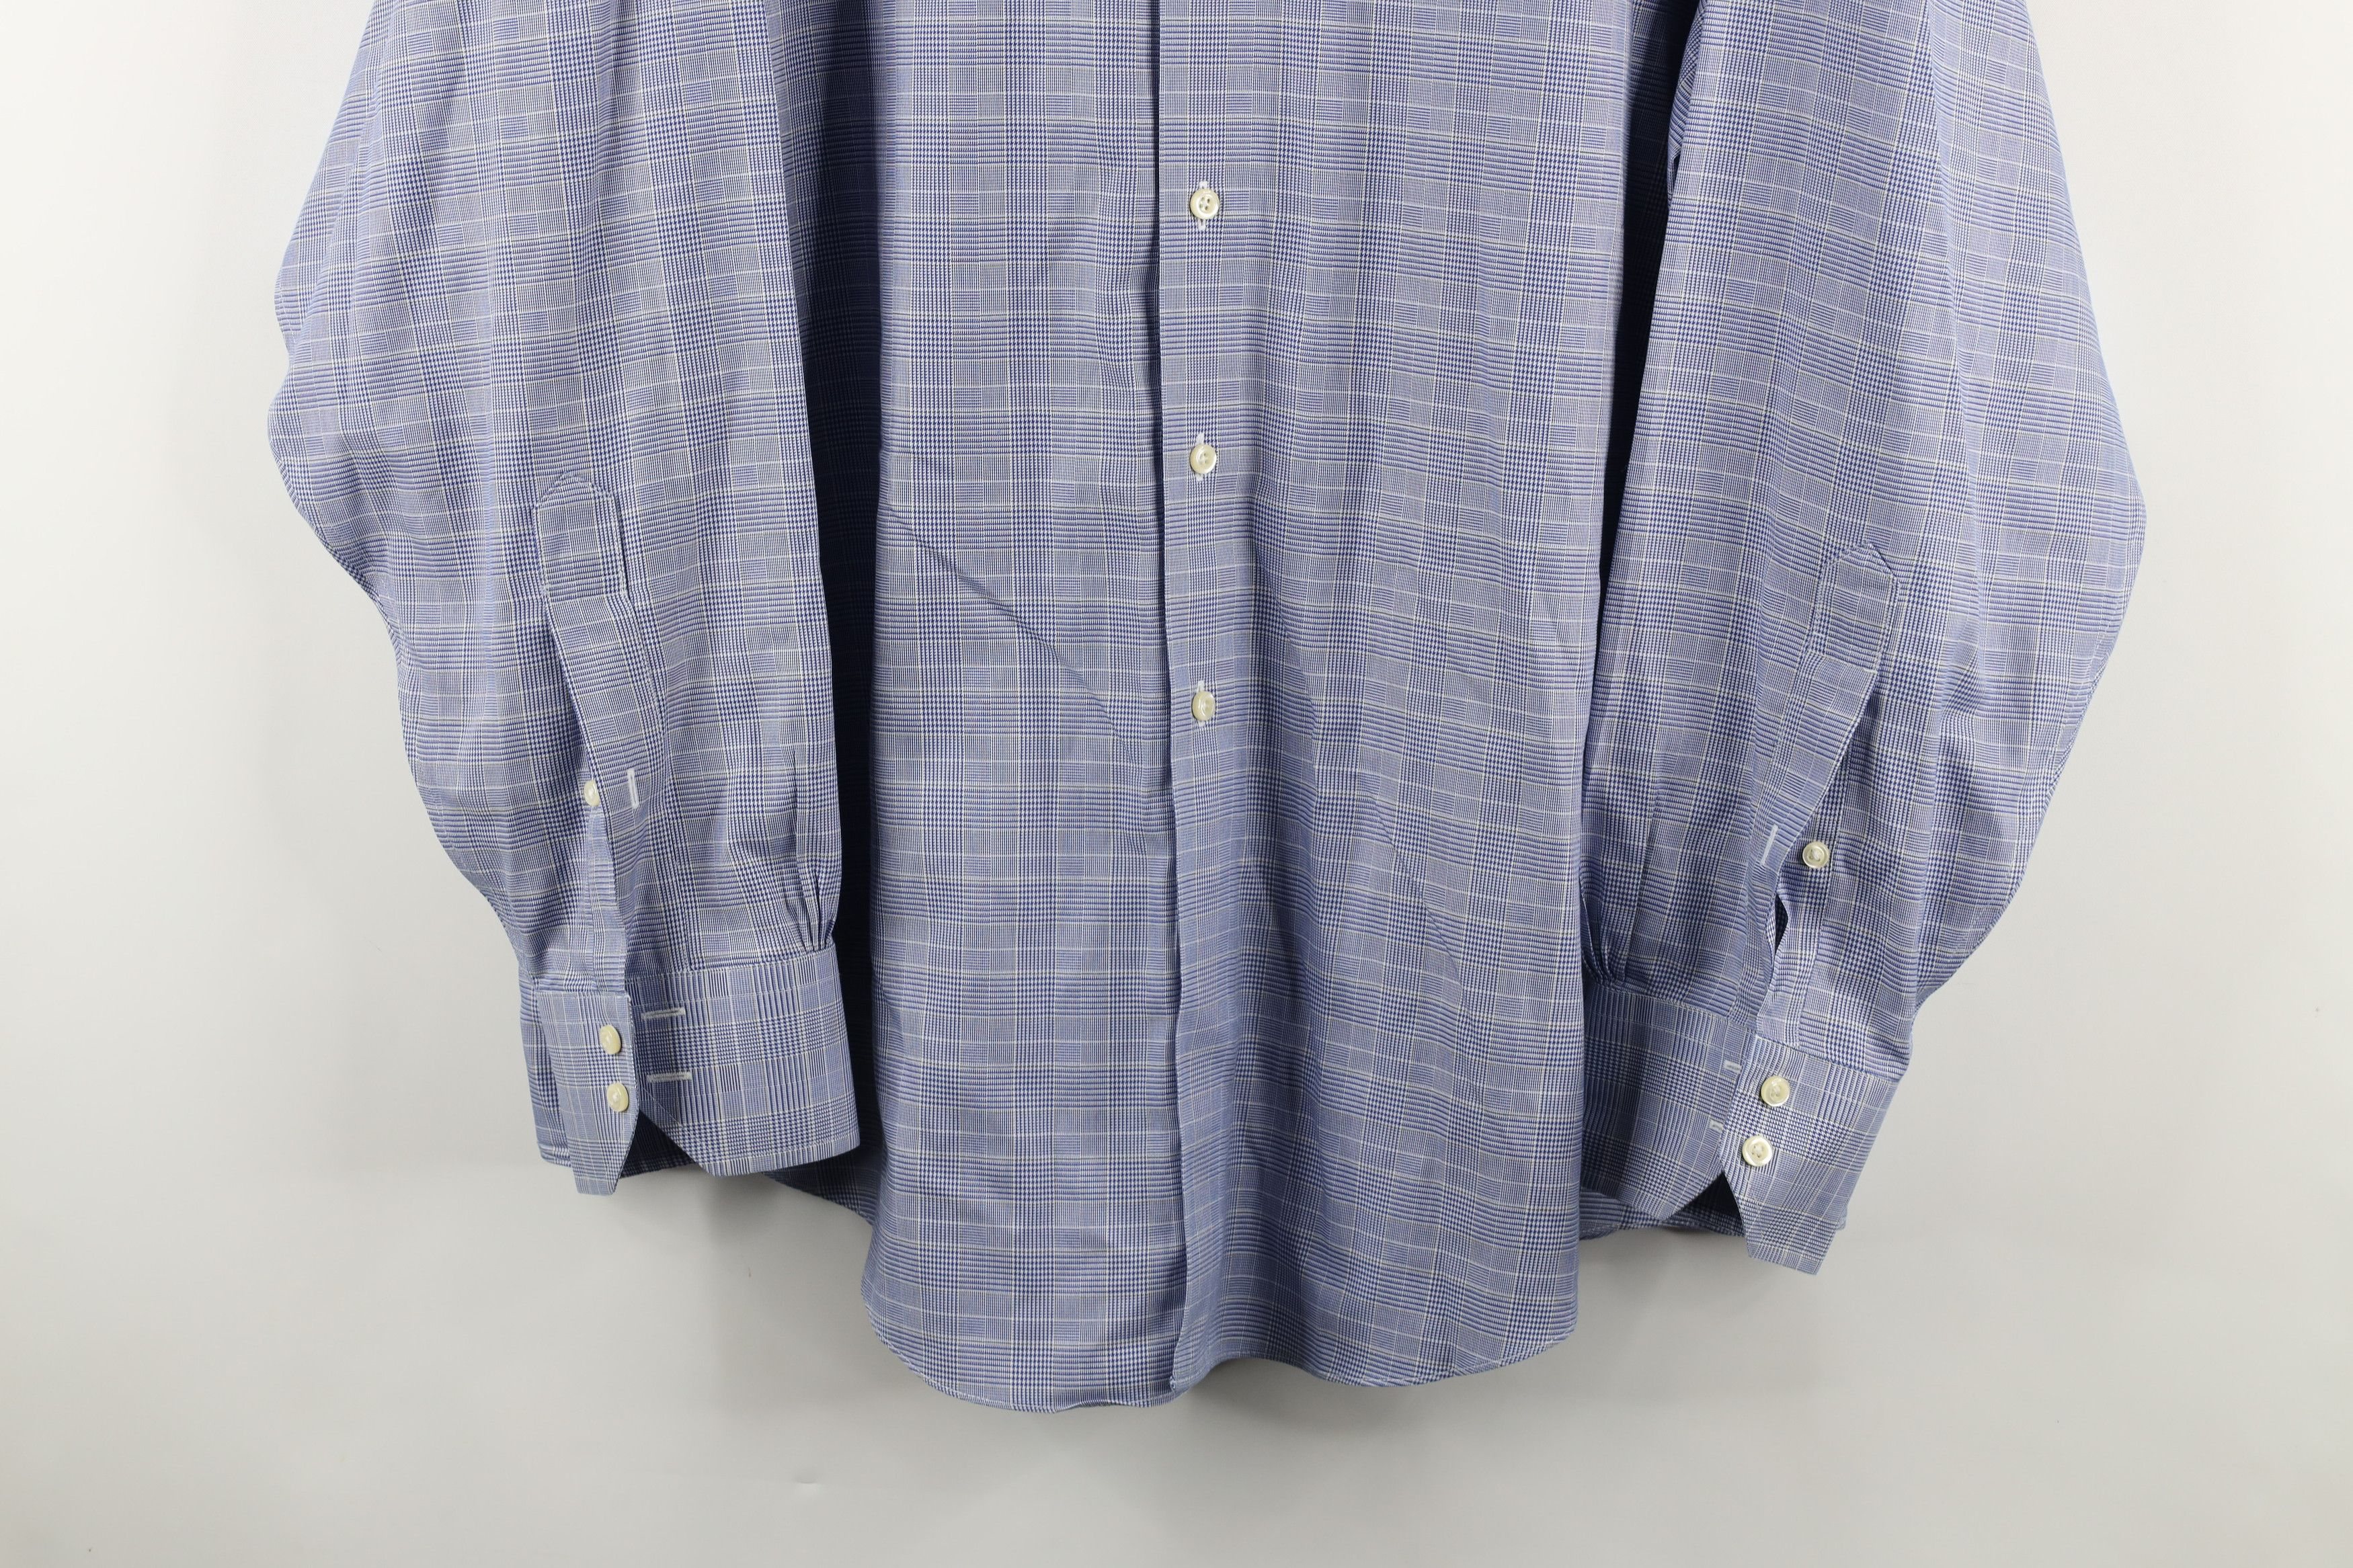 Vintage Vintage 90s Brooks Brothers Non Iron Collared Button Shirt Size US M / EU 48-50 / 2 - 3 Thumbnail